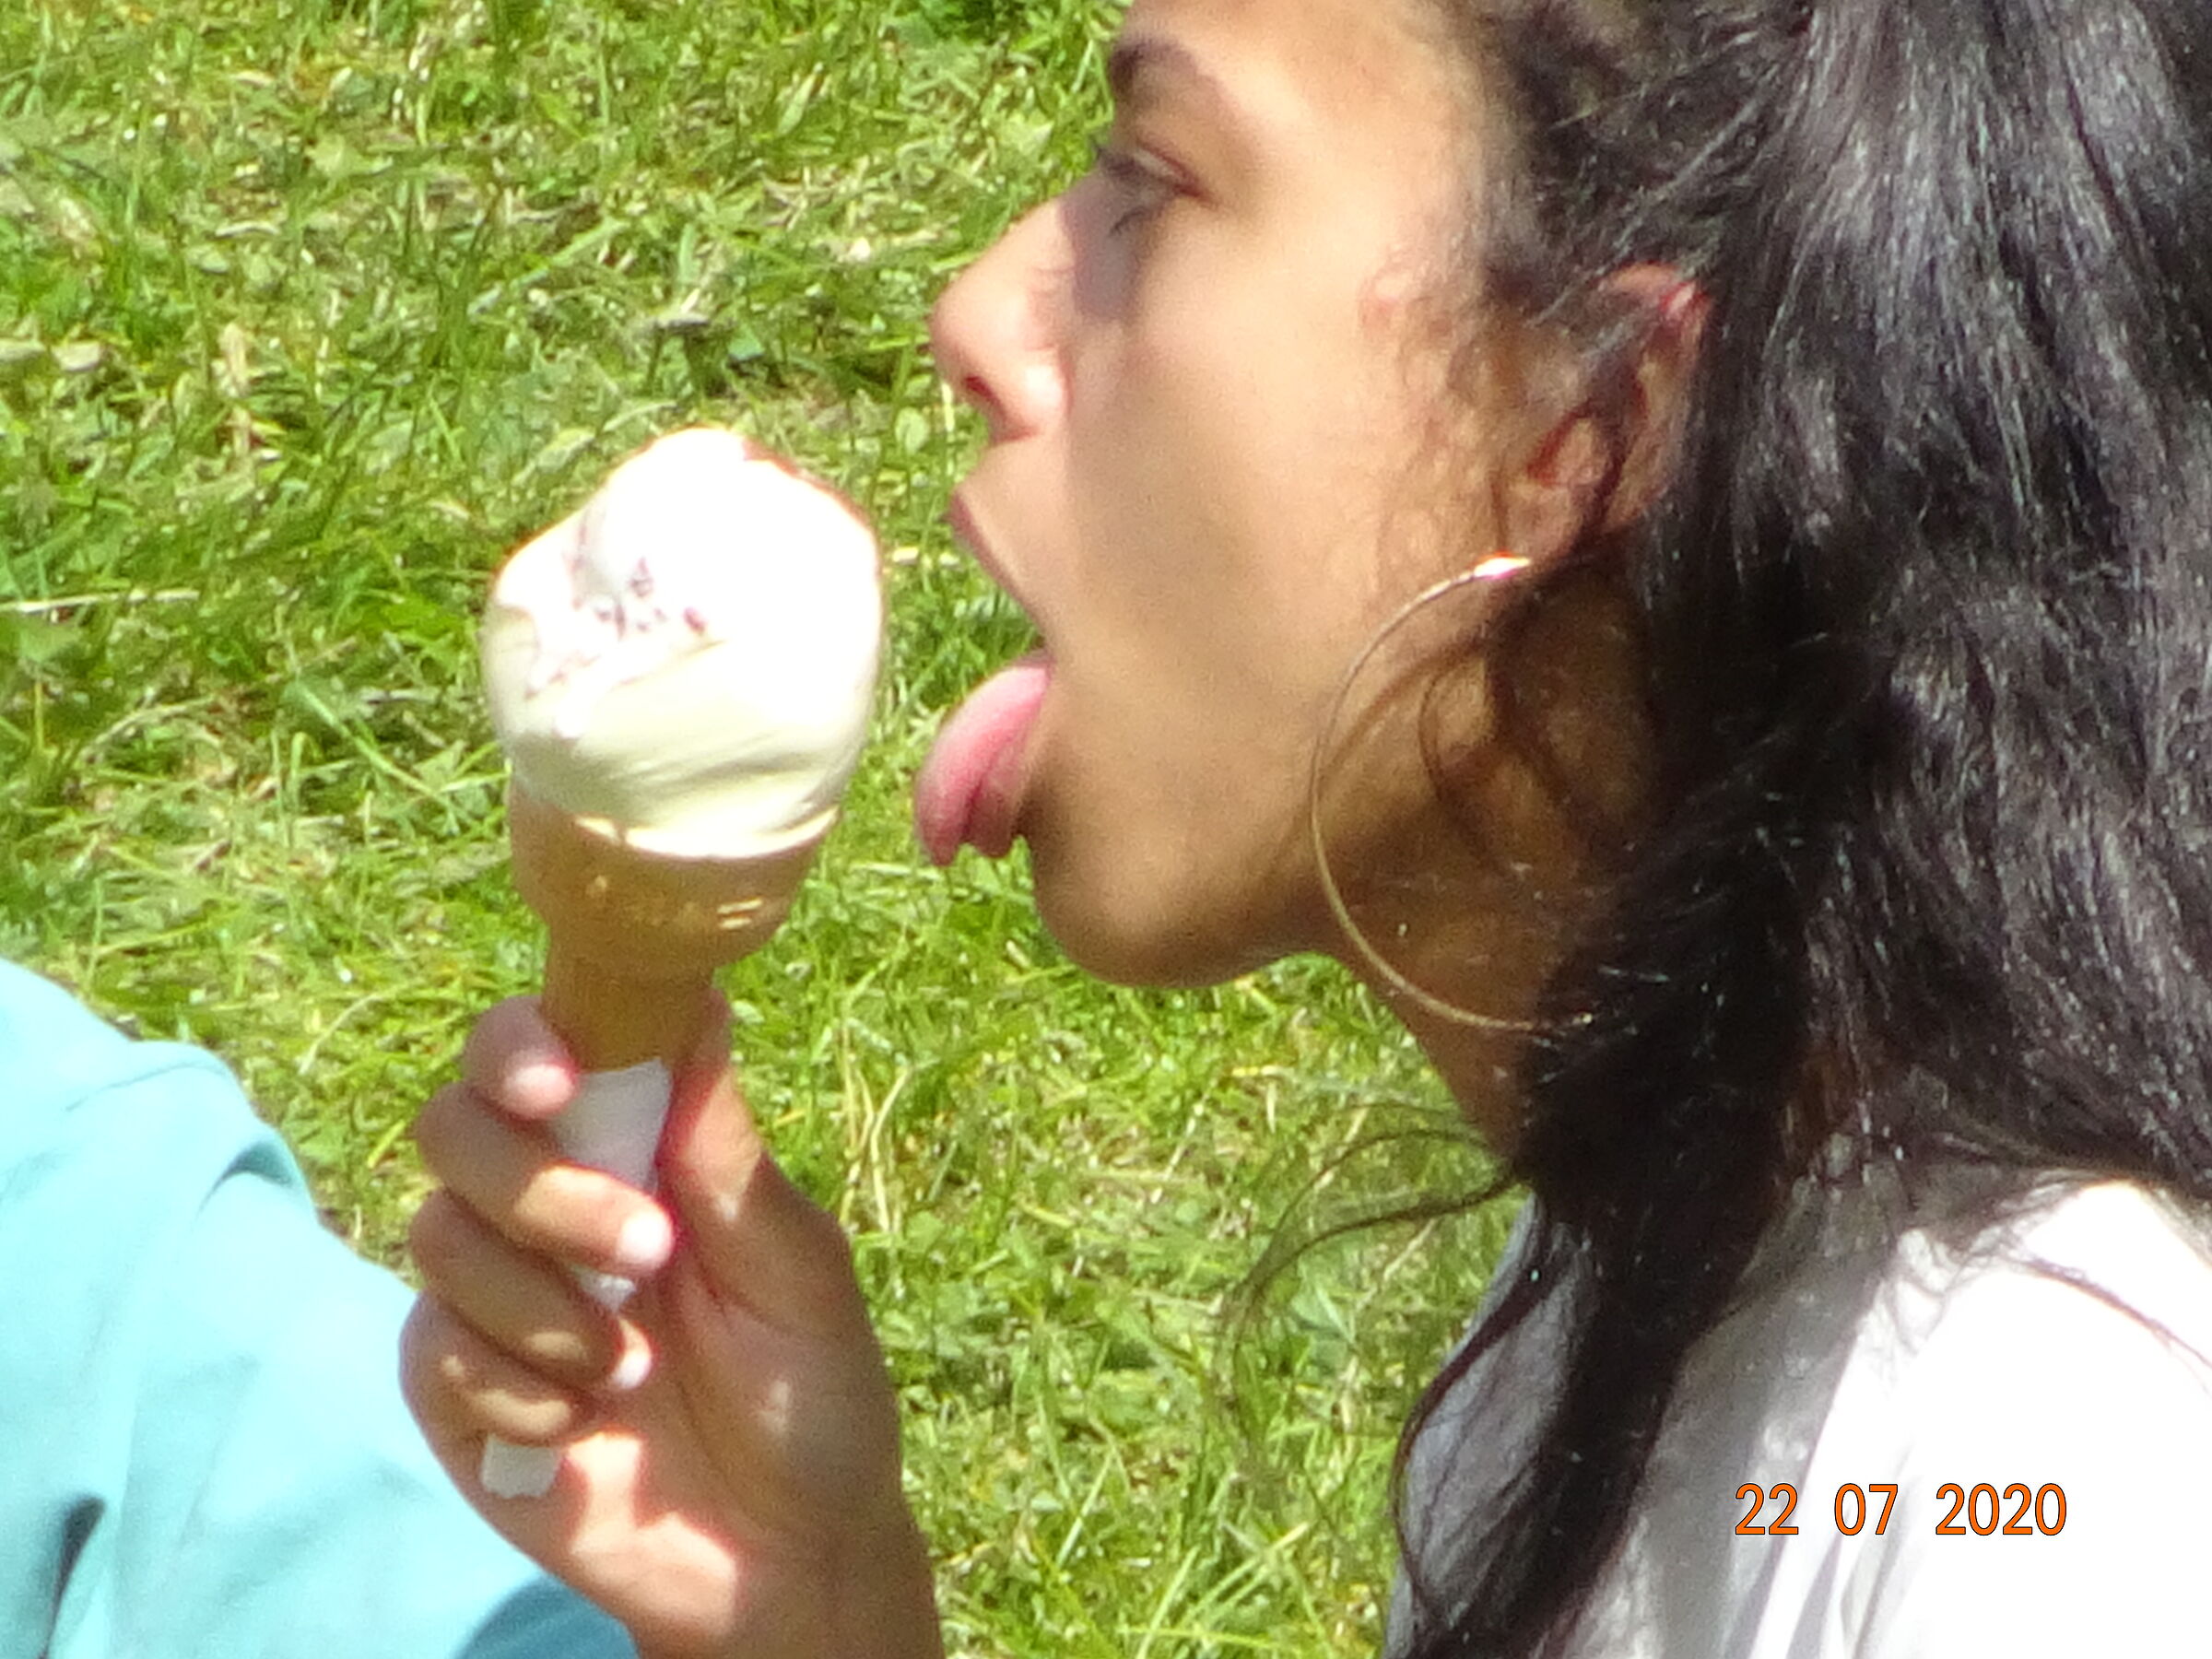 Ice cream...